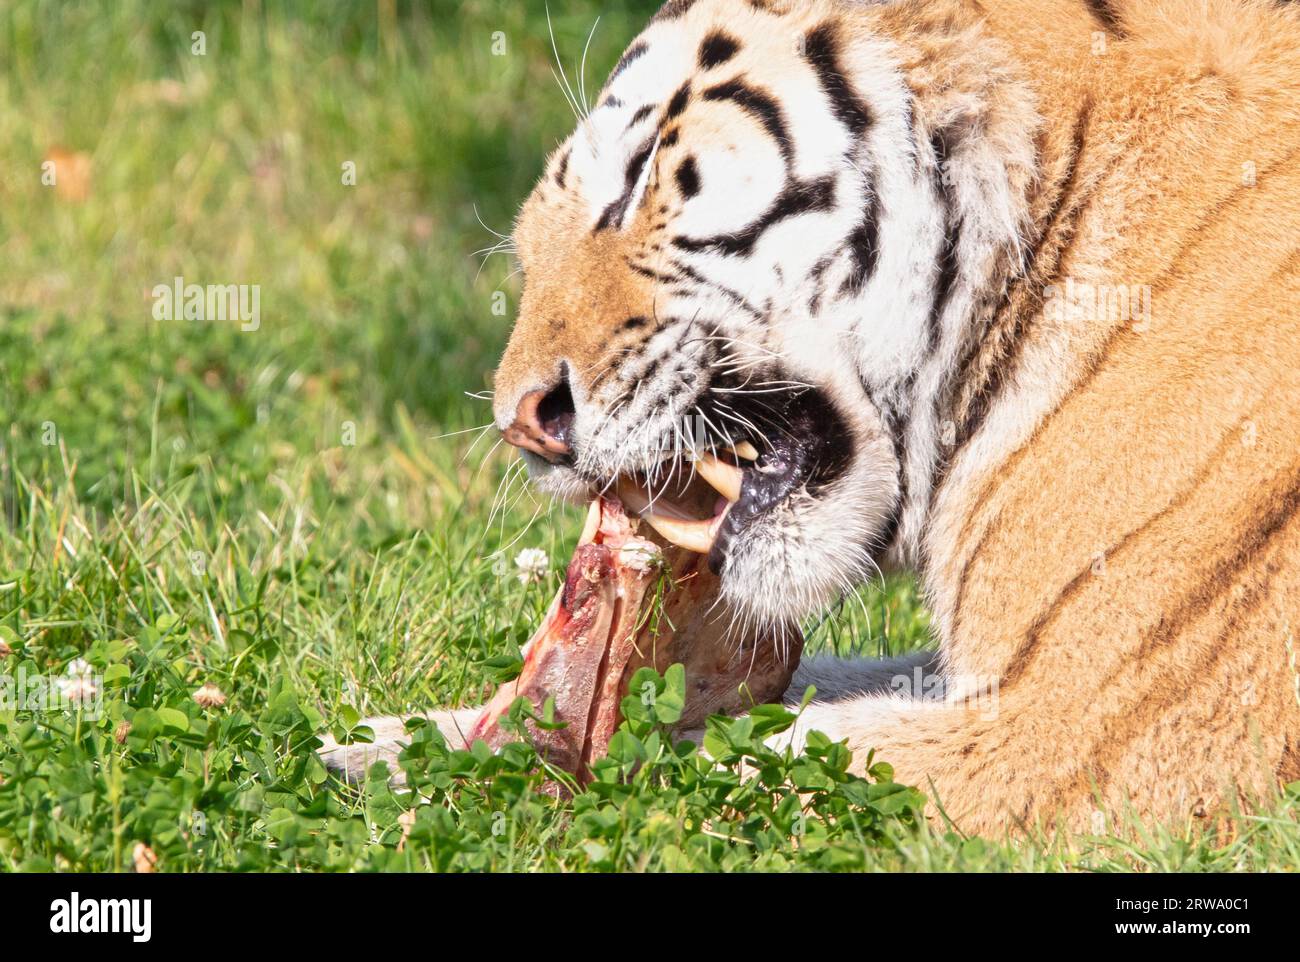 Tigre d'Amour dans l'herbe, manger - foyer sélectif Banque D'Images